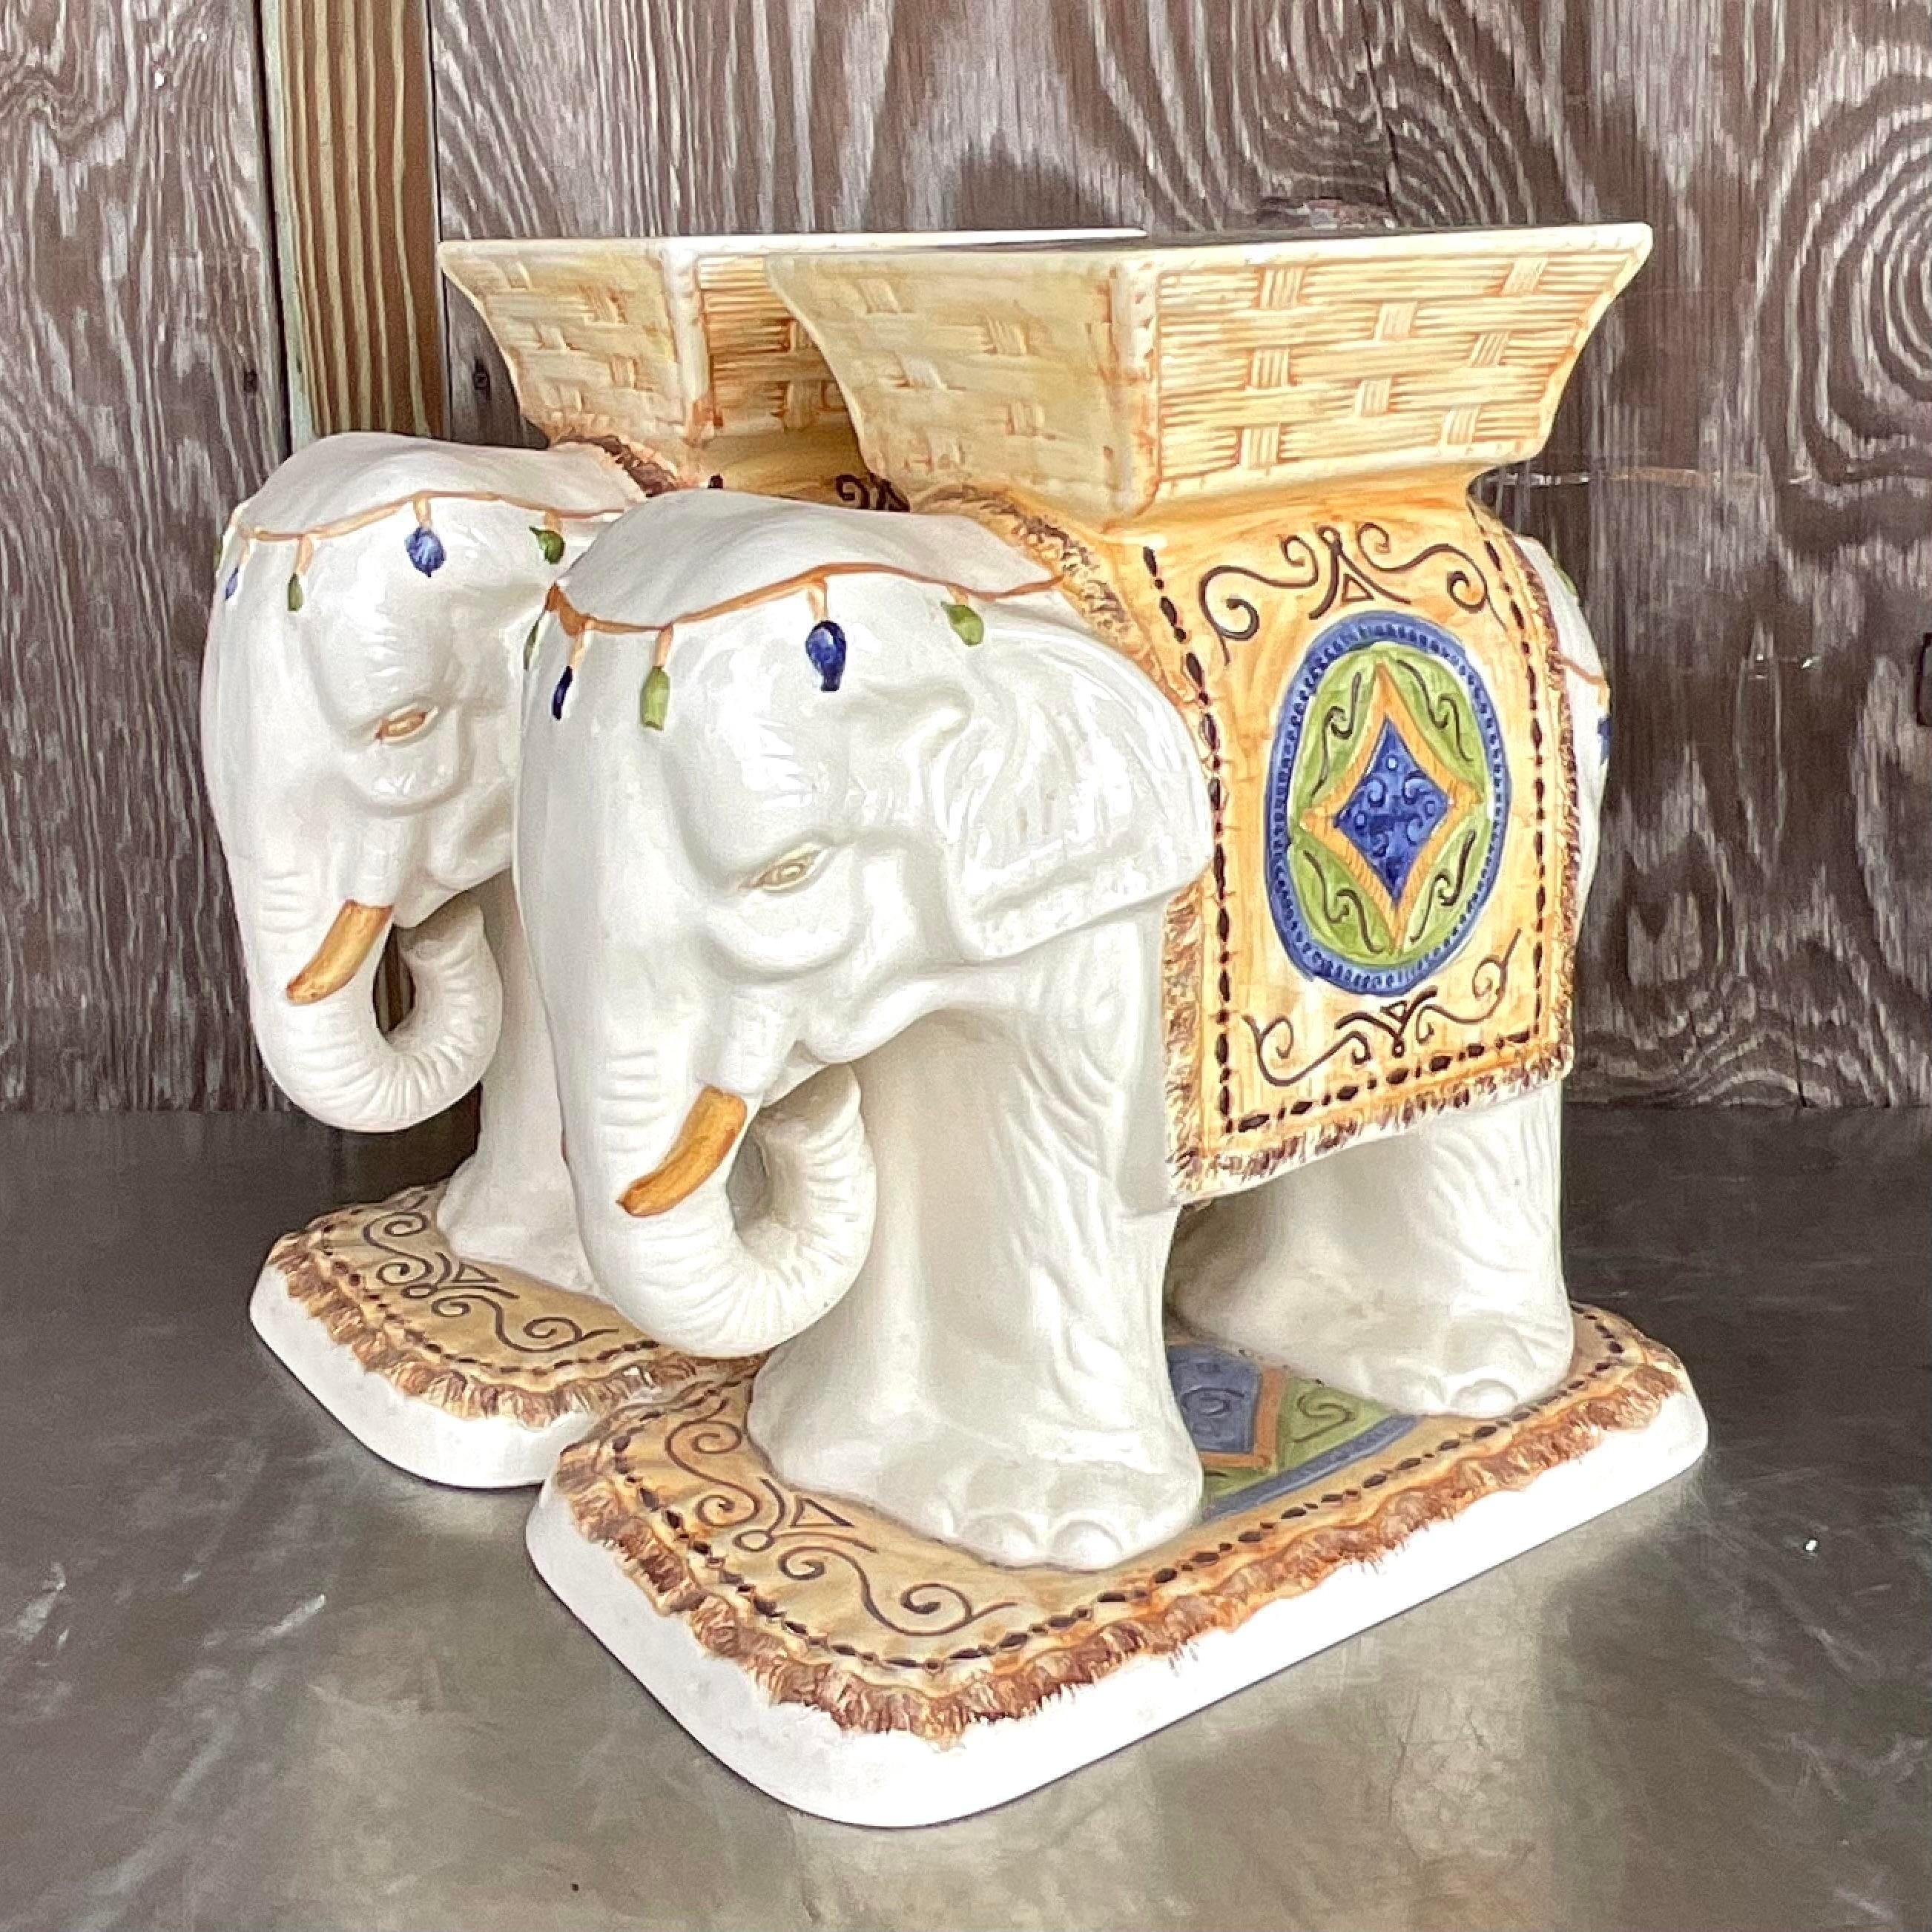 20th Century Vintage Boho Glazed Ceramic Elephant Stools - a Pair For Sale